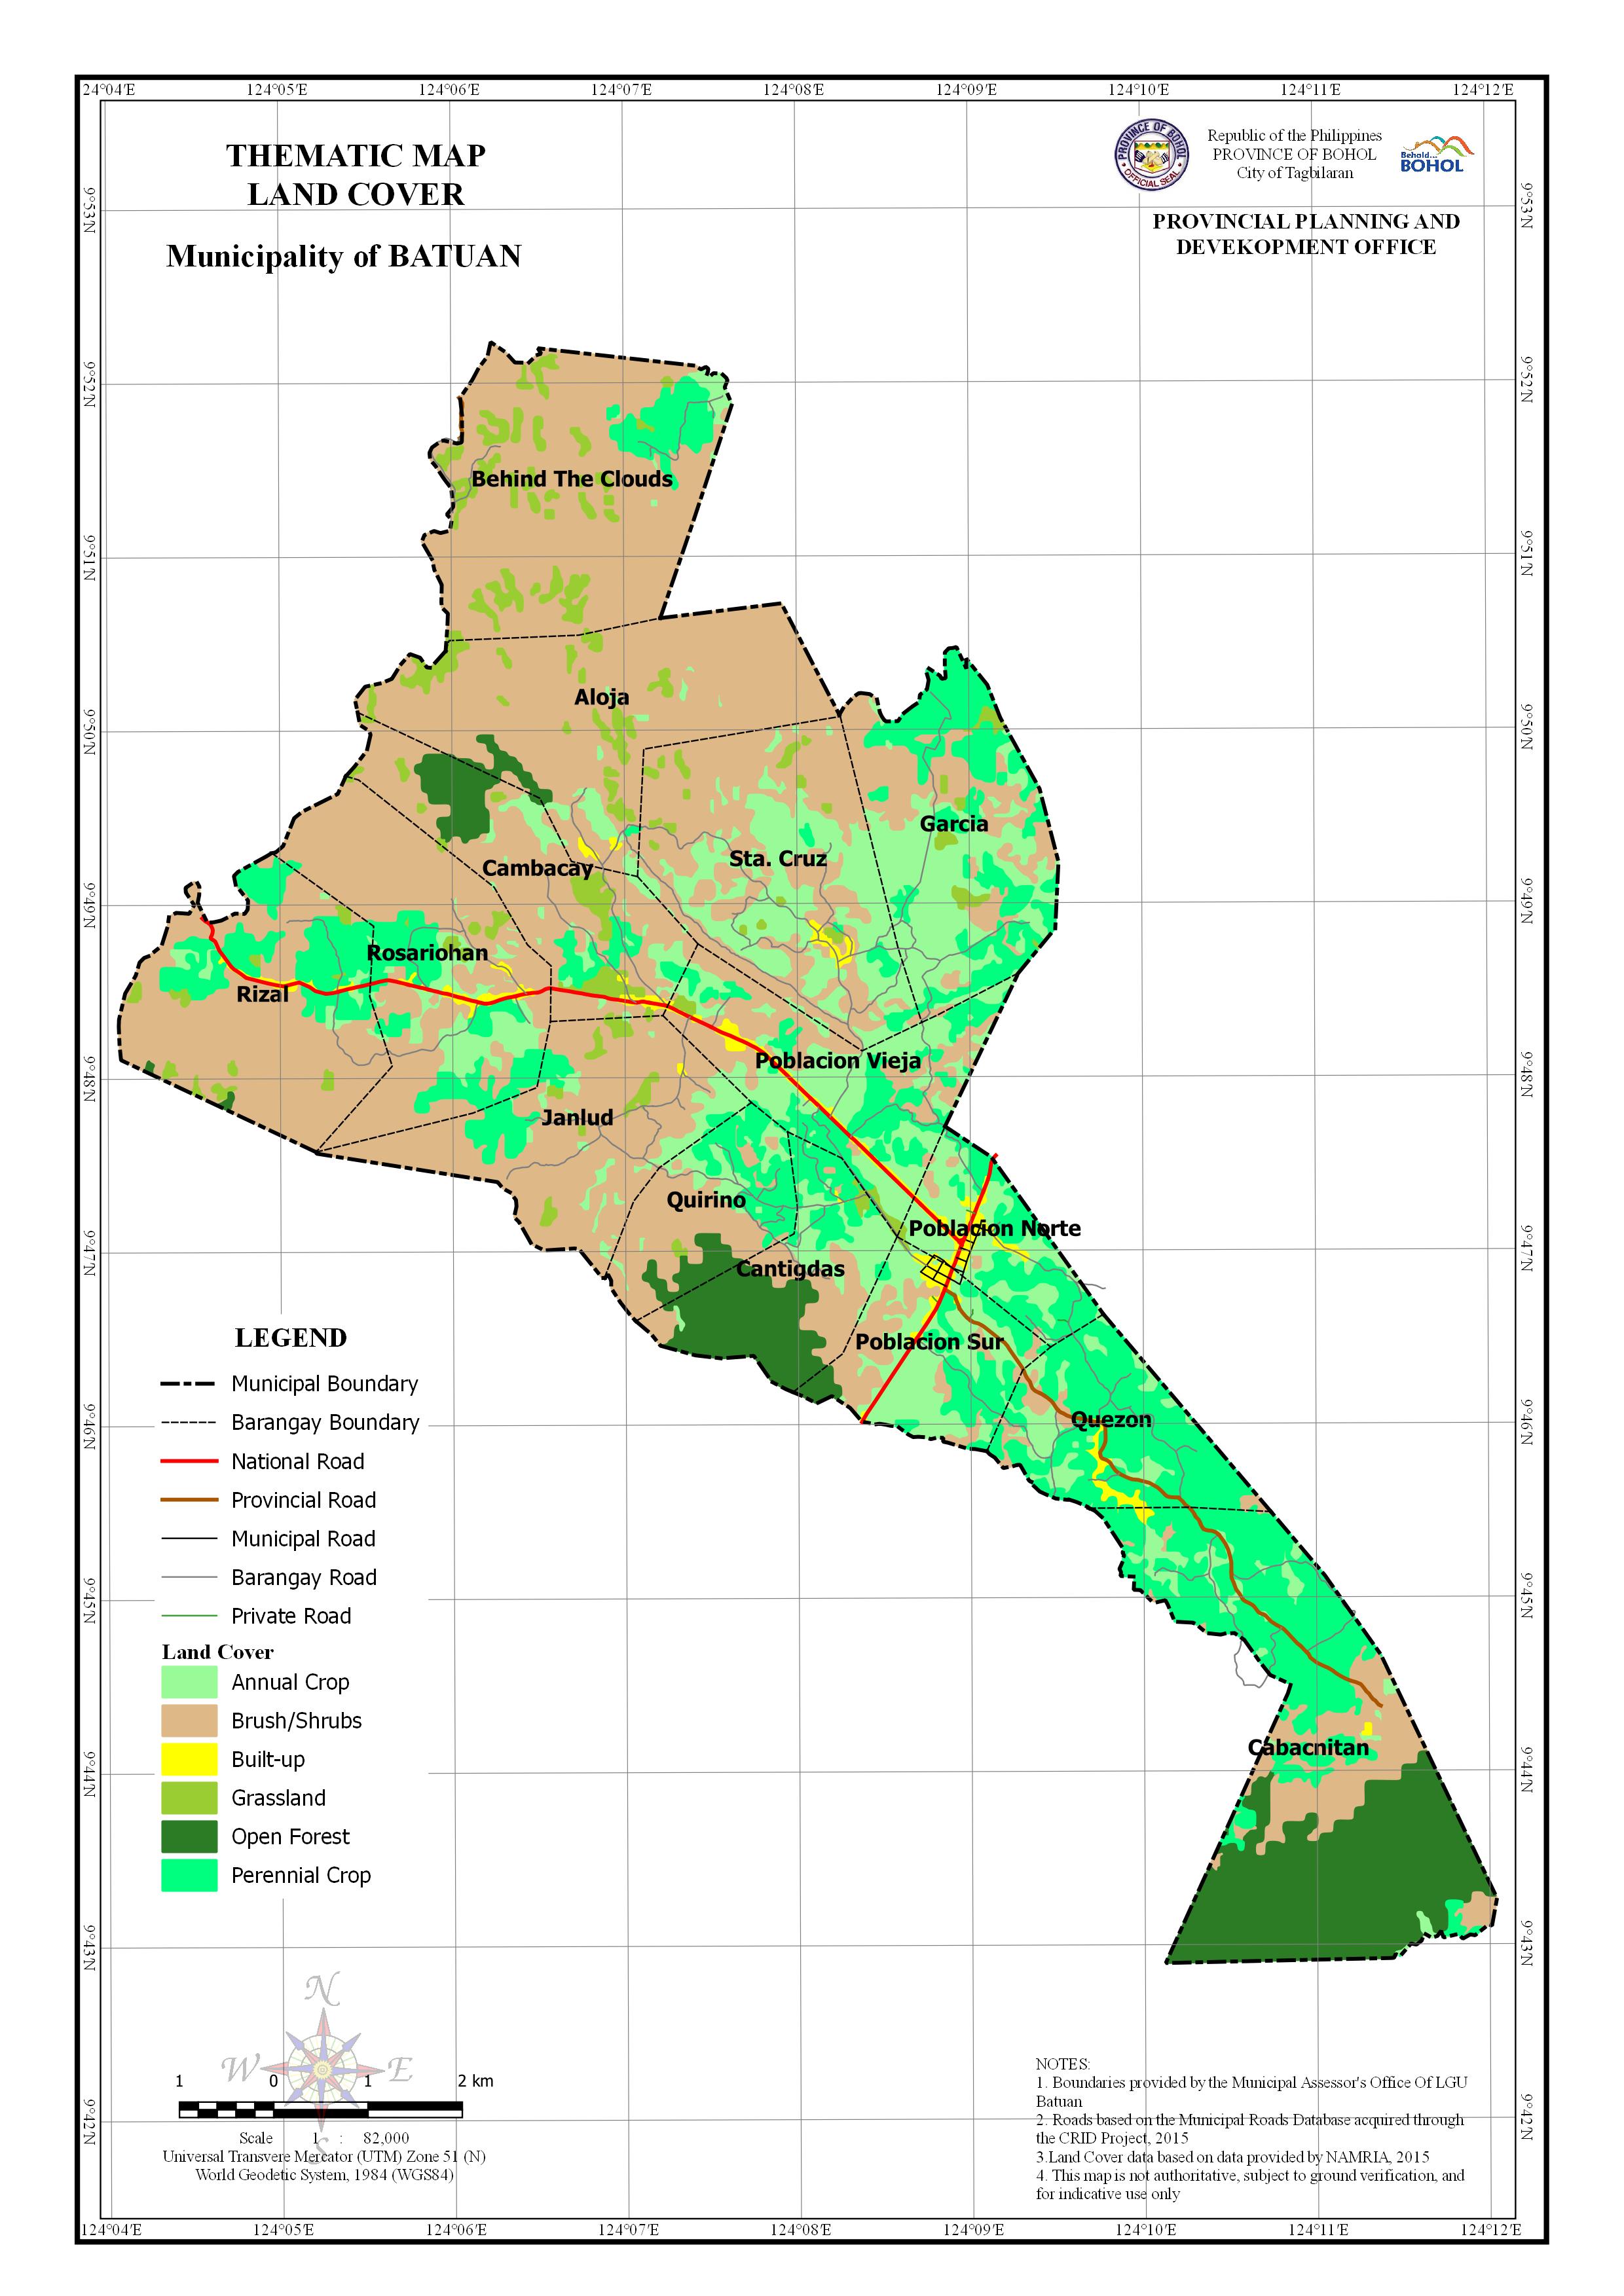 Land Cover Map of the Municipality of Batuan